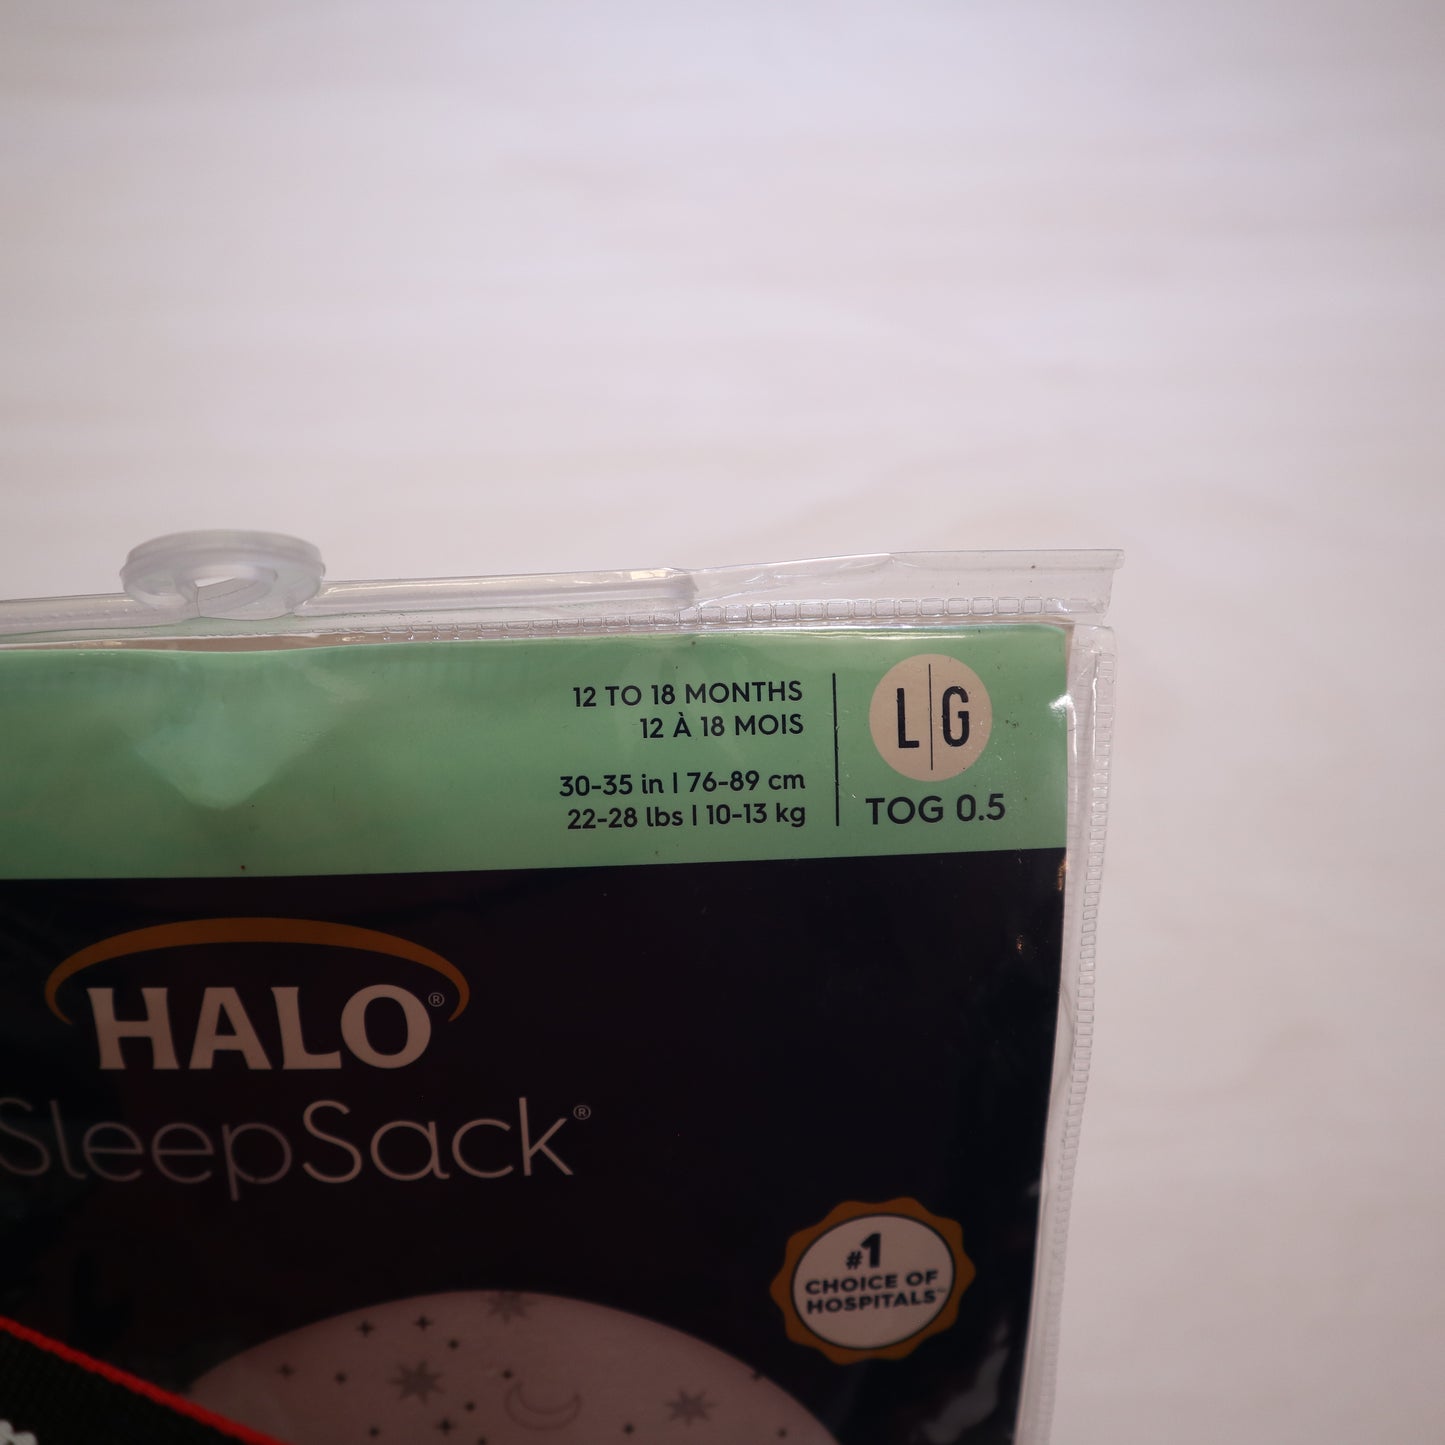 Halo - Sleep Sack (12-18M)